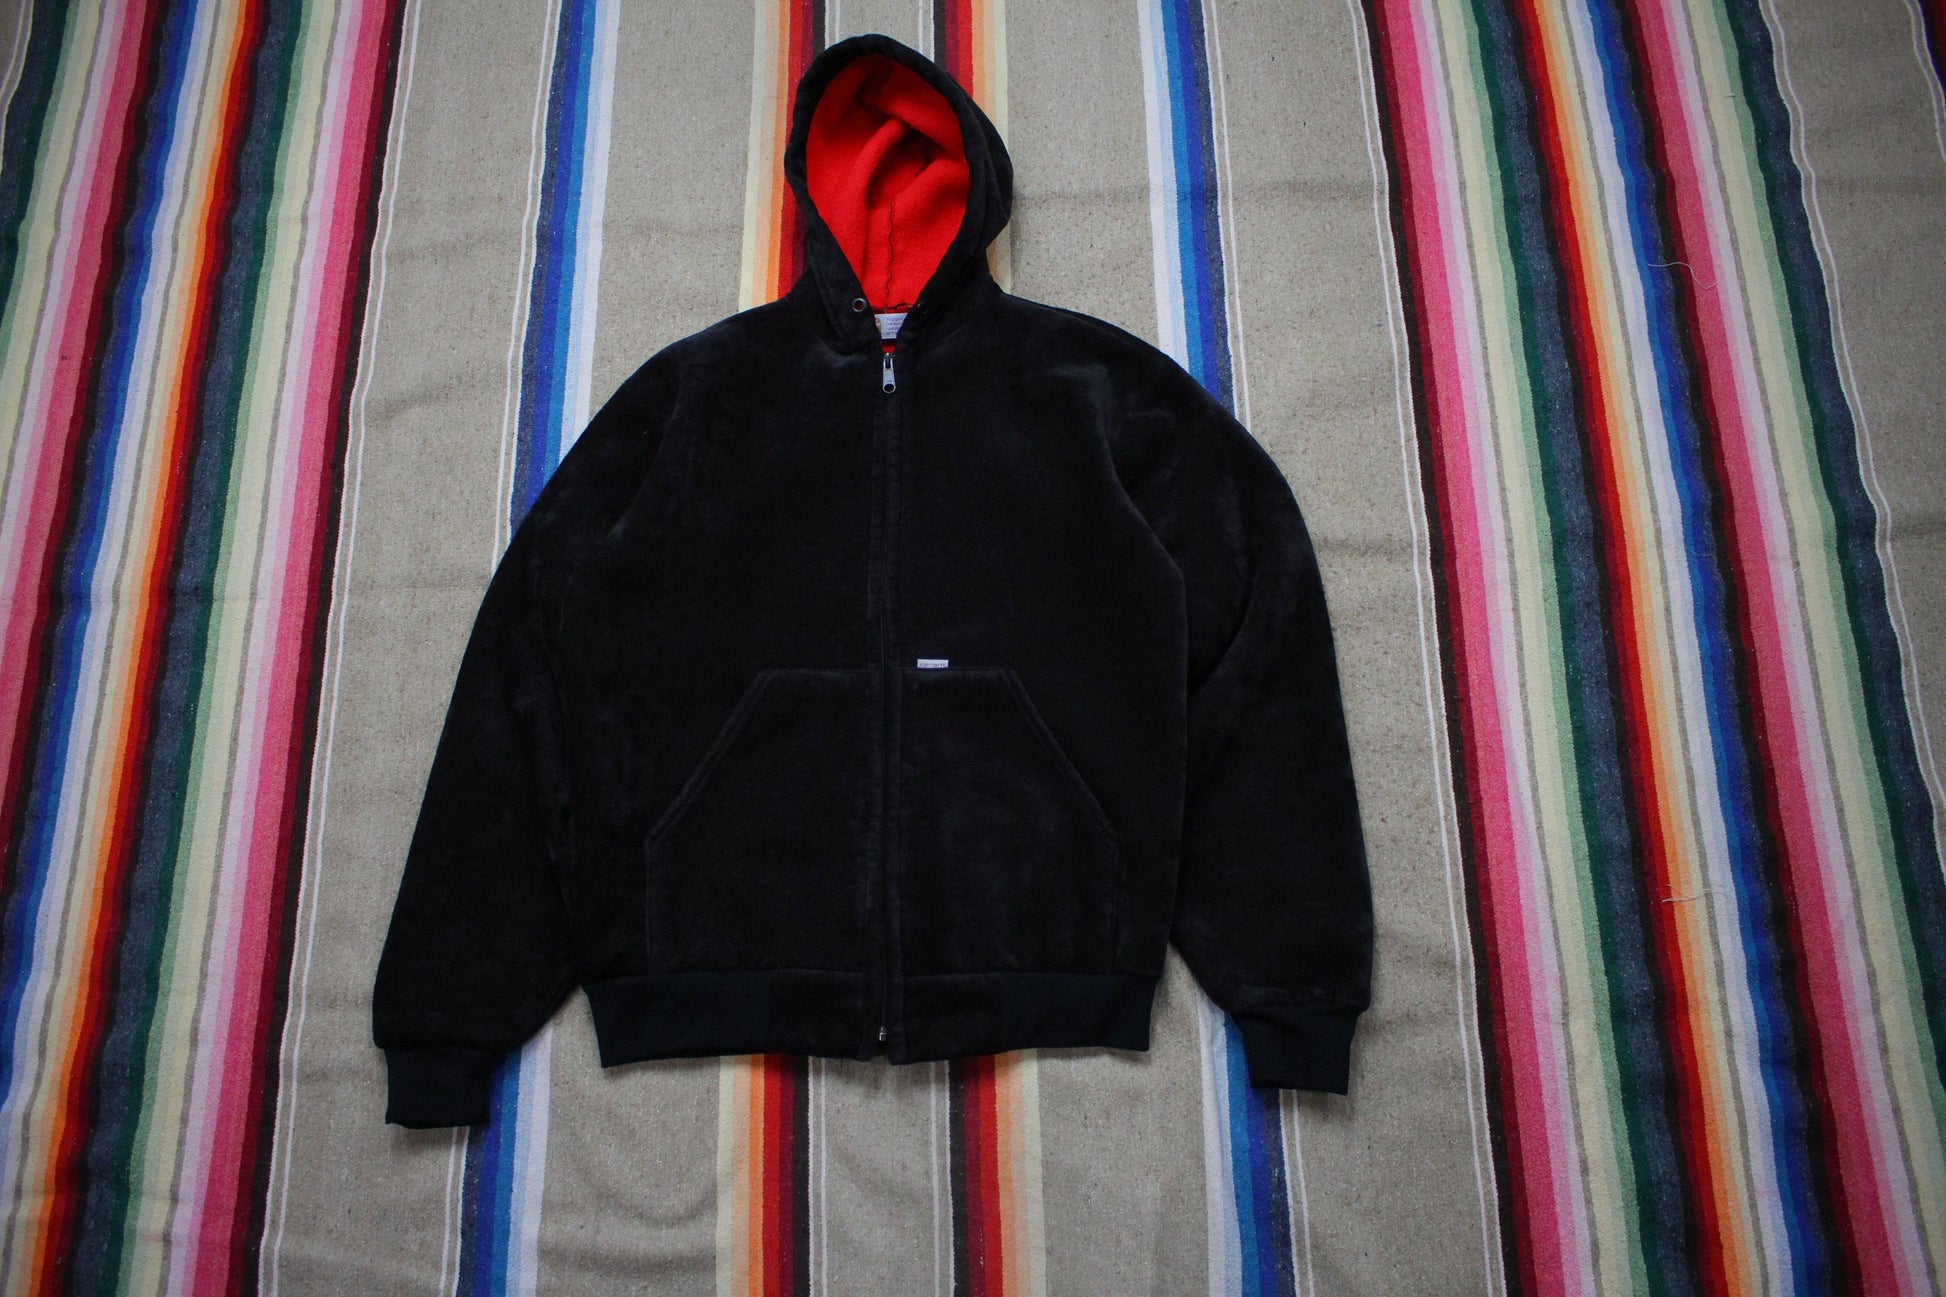 1980s Carhartt Rugged Outdoor Gear Velour Velvet Fleece Lined Hoodie Sweatshirt Made in USA Size M/L